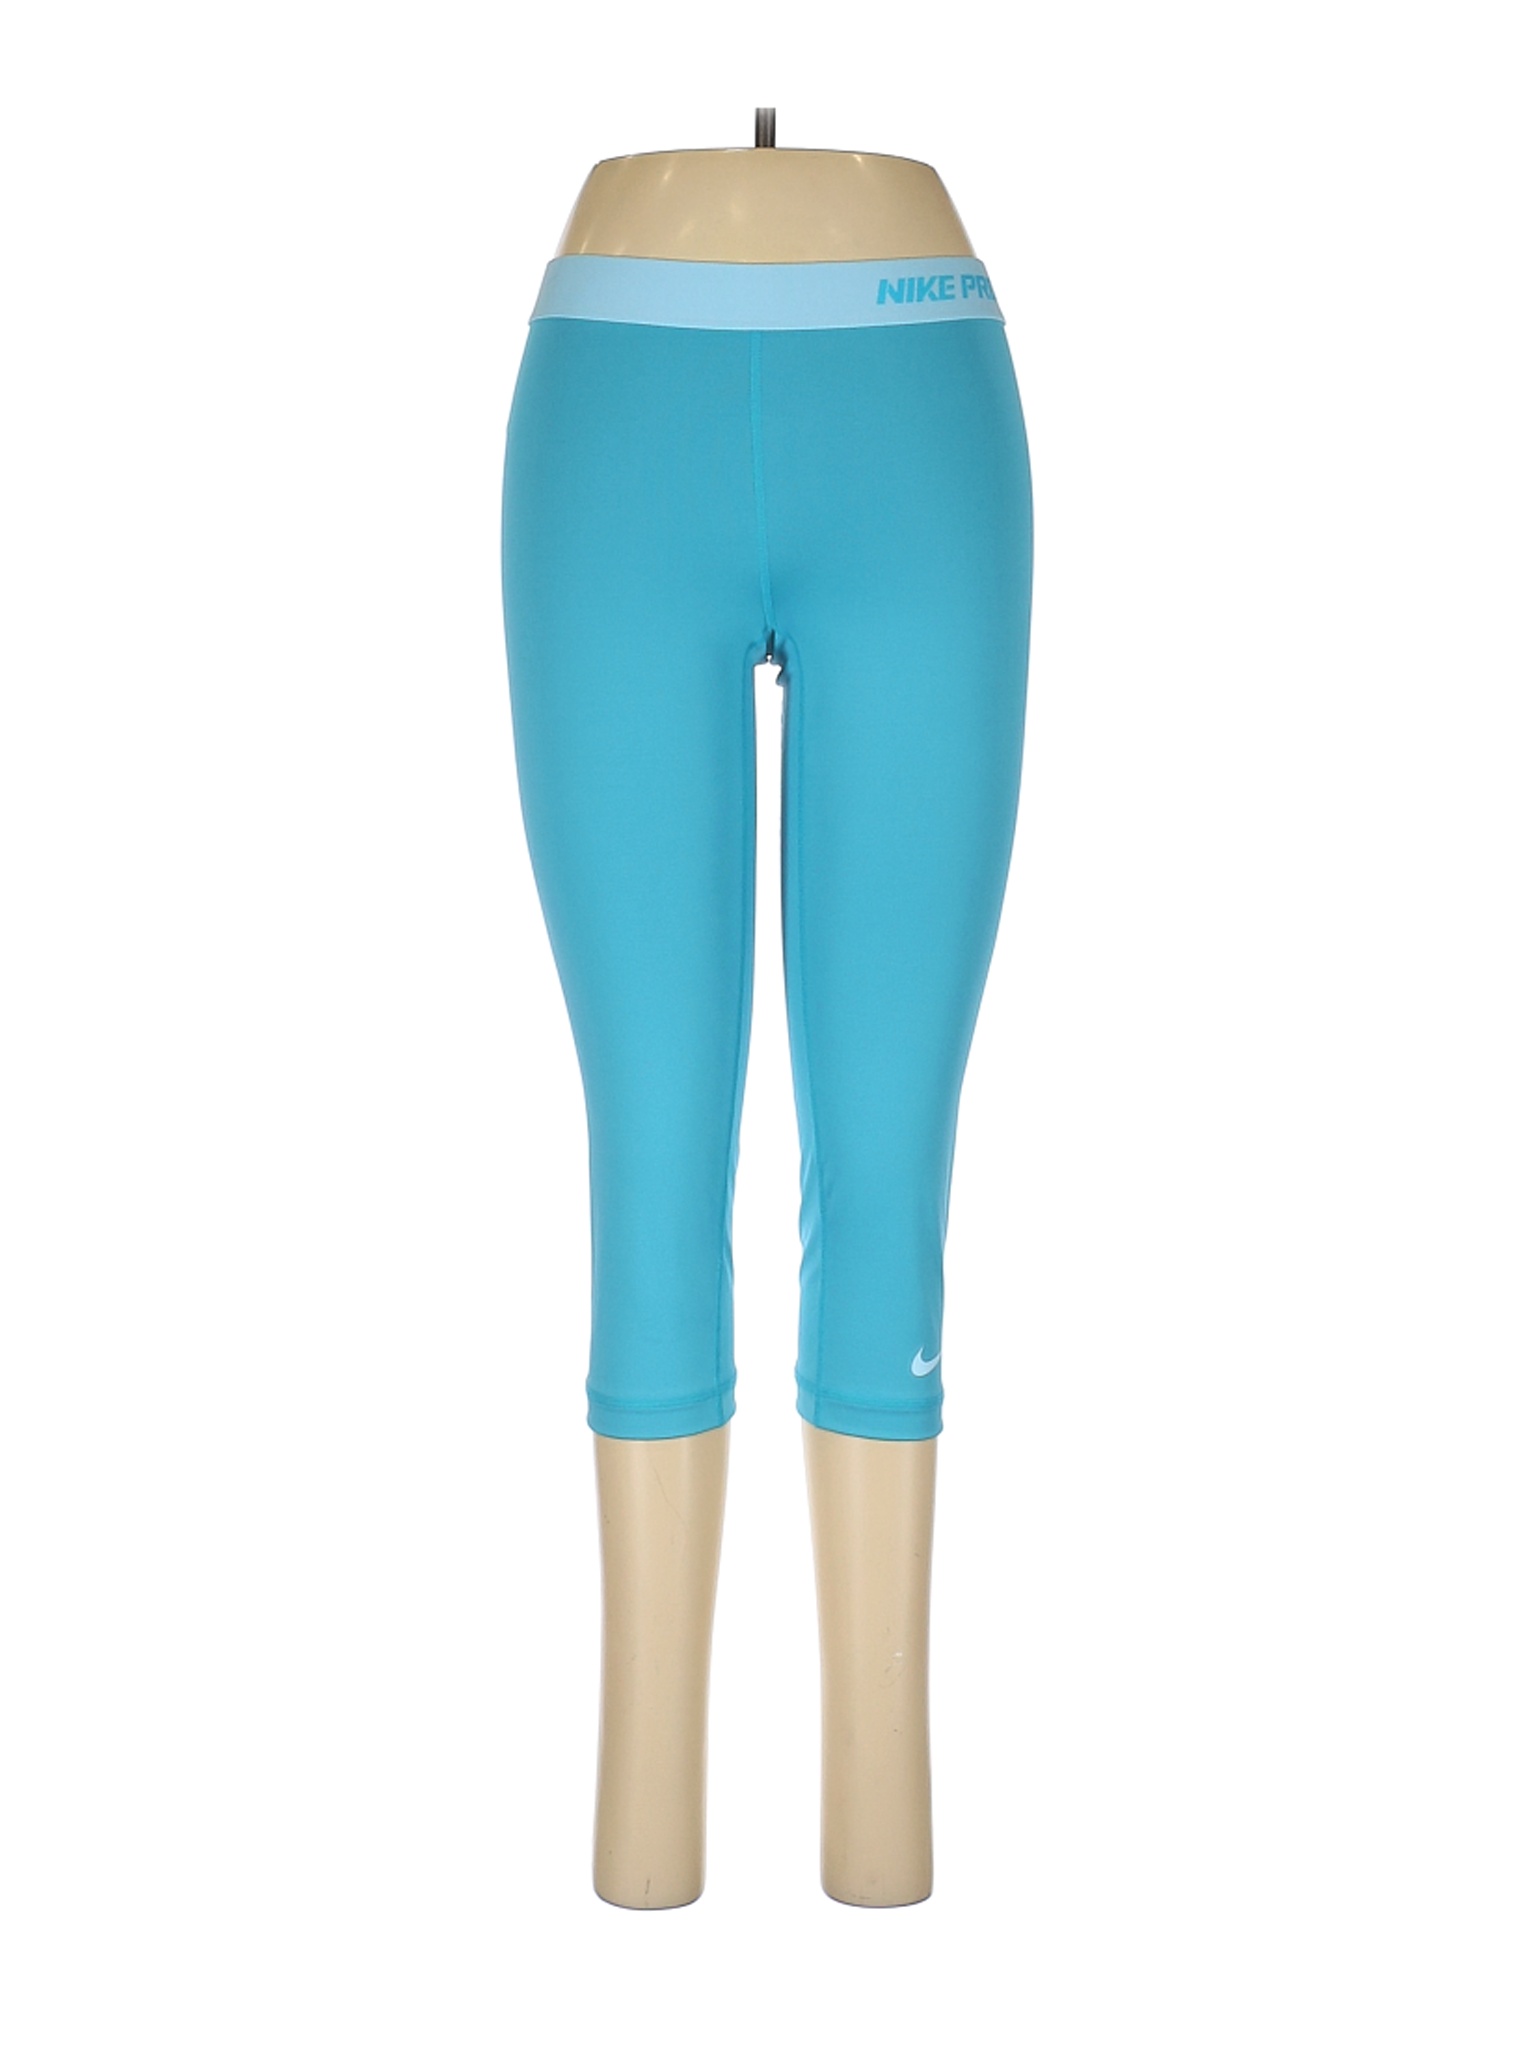 Nike Women Blue Active Pants M | eBay